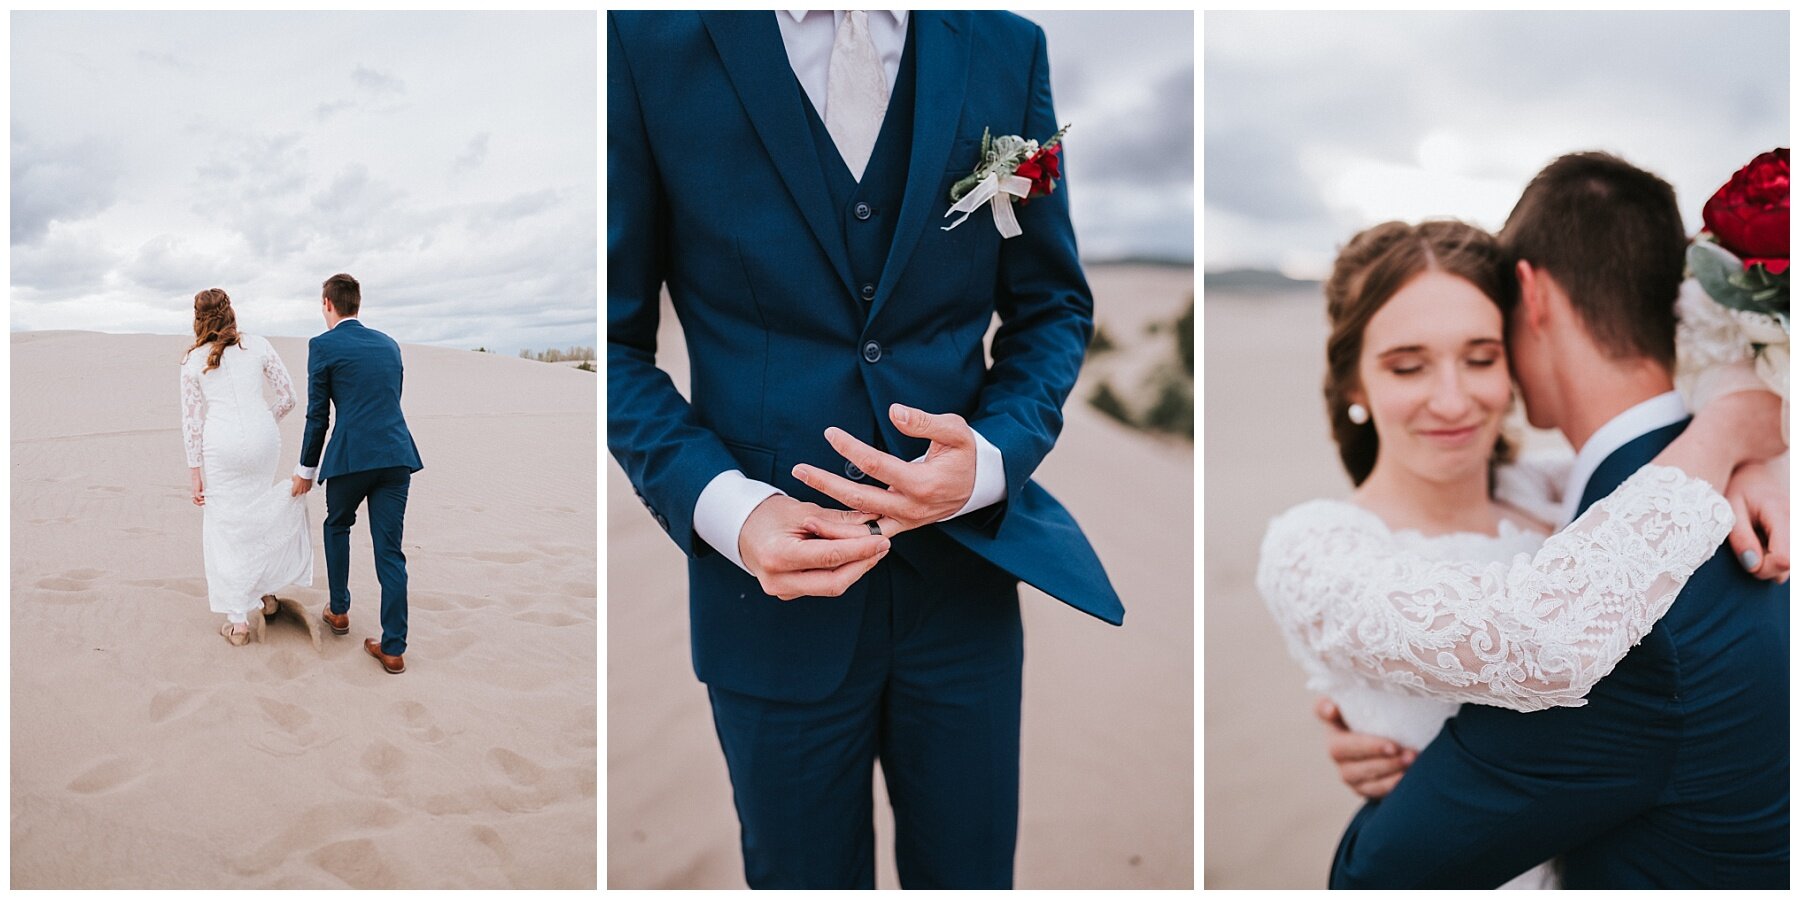 wedding-day-photographer-twin-falls-idaho-wedding-photographer-wedding-day-idaho-falls-photographer-eastern-idaho-wedding-photographer-st-anthony-sand-dunes-idaho-st-anthony-details-moody-sky-long-sleeve-lace-beaded-wedding-dress-blue-suit-groom